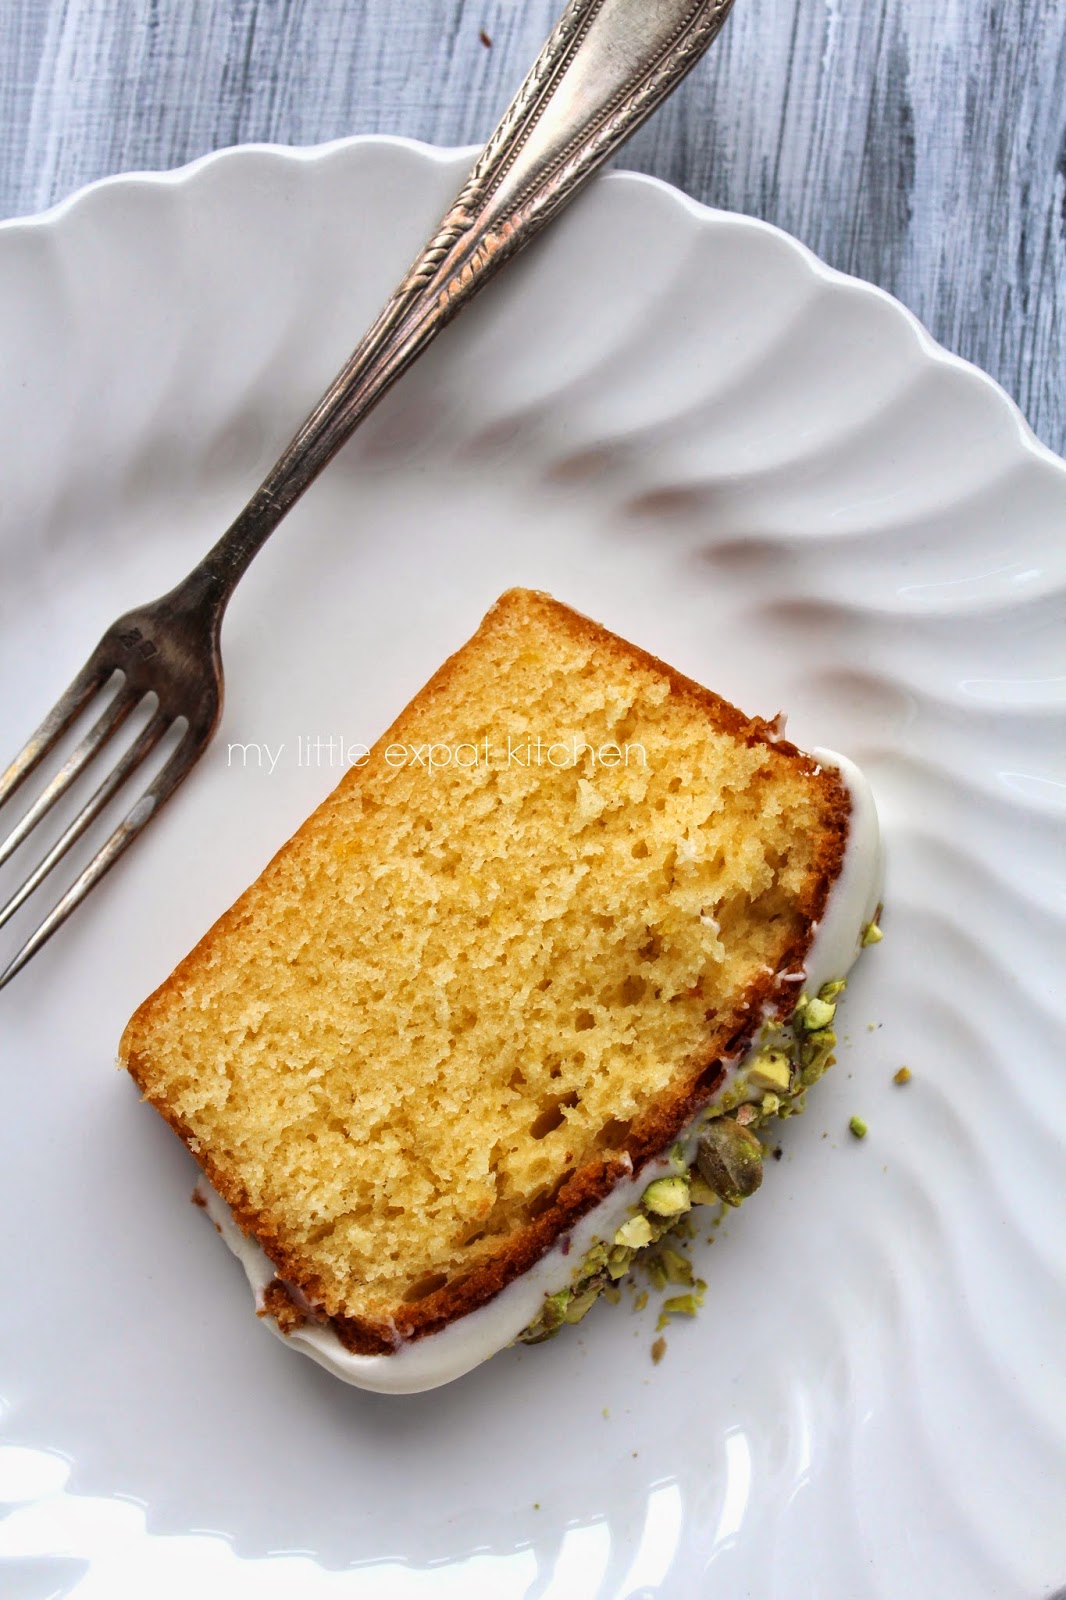 My Little Expat Kitchen: Lemon cake with Greek wild thyme honey glaze ...